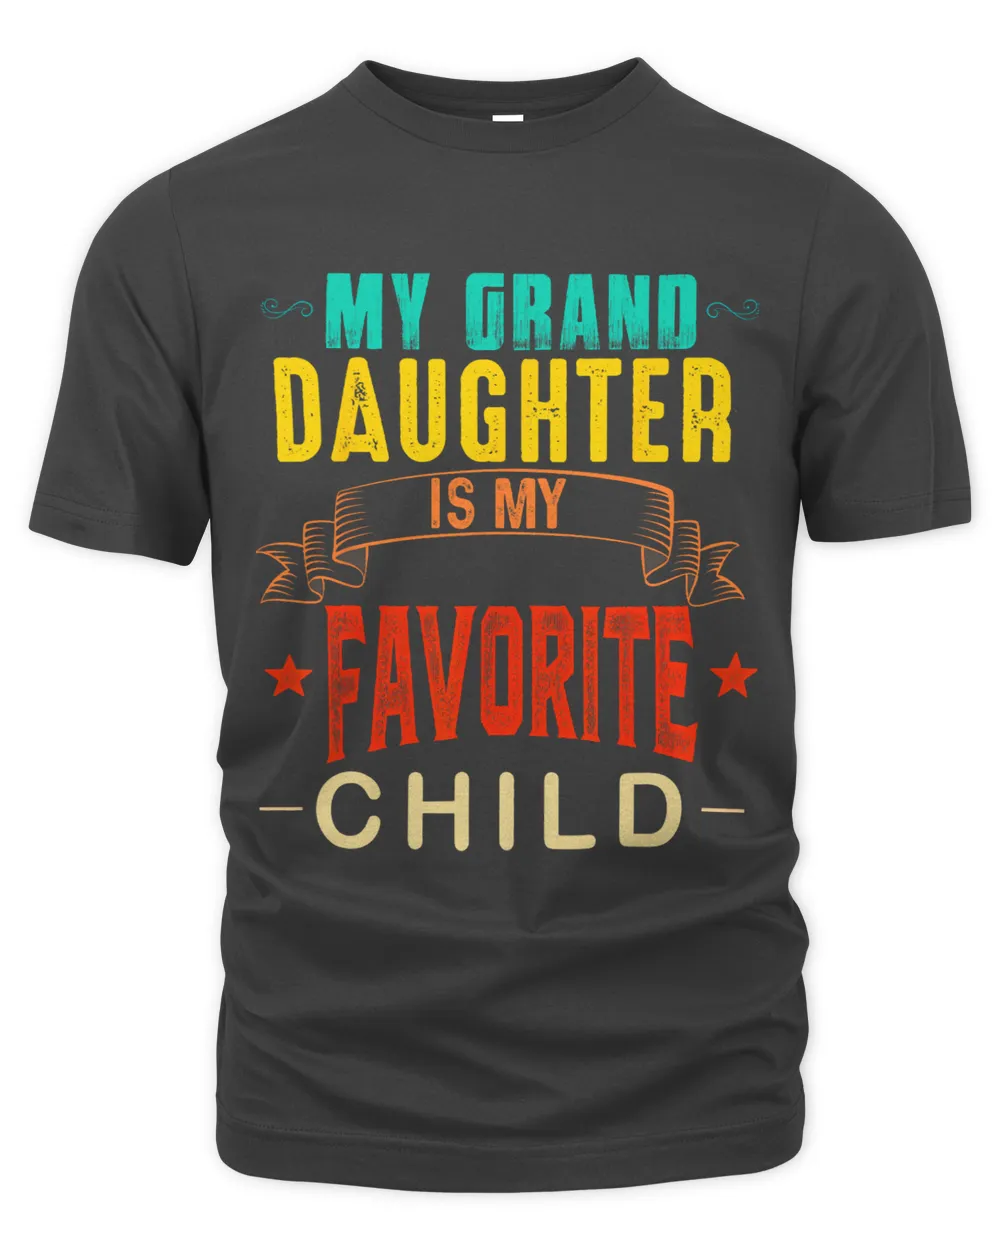 My Granddaughter is My Favorite Child Funny Grandpa Grandma